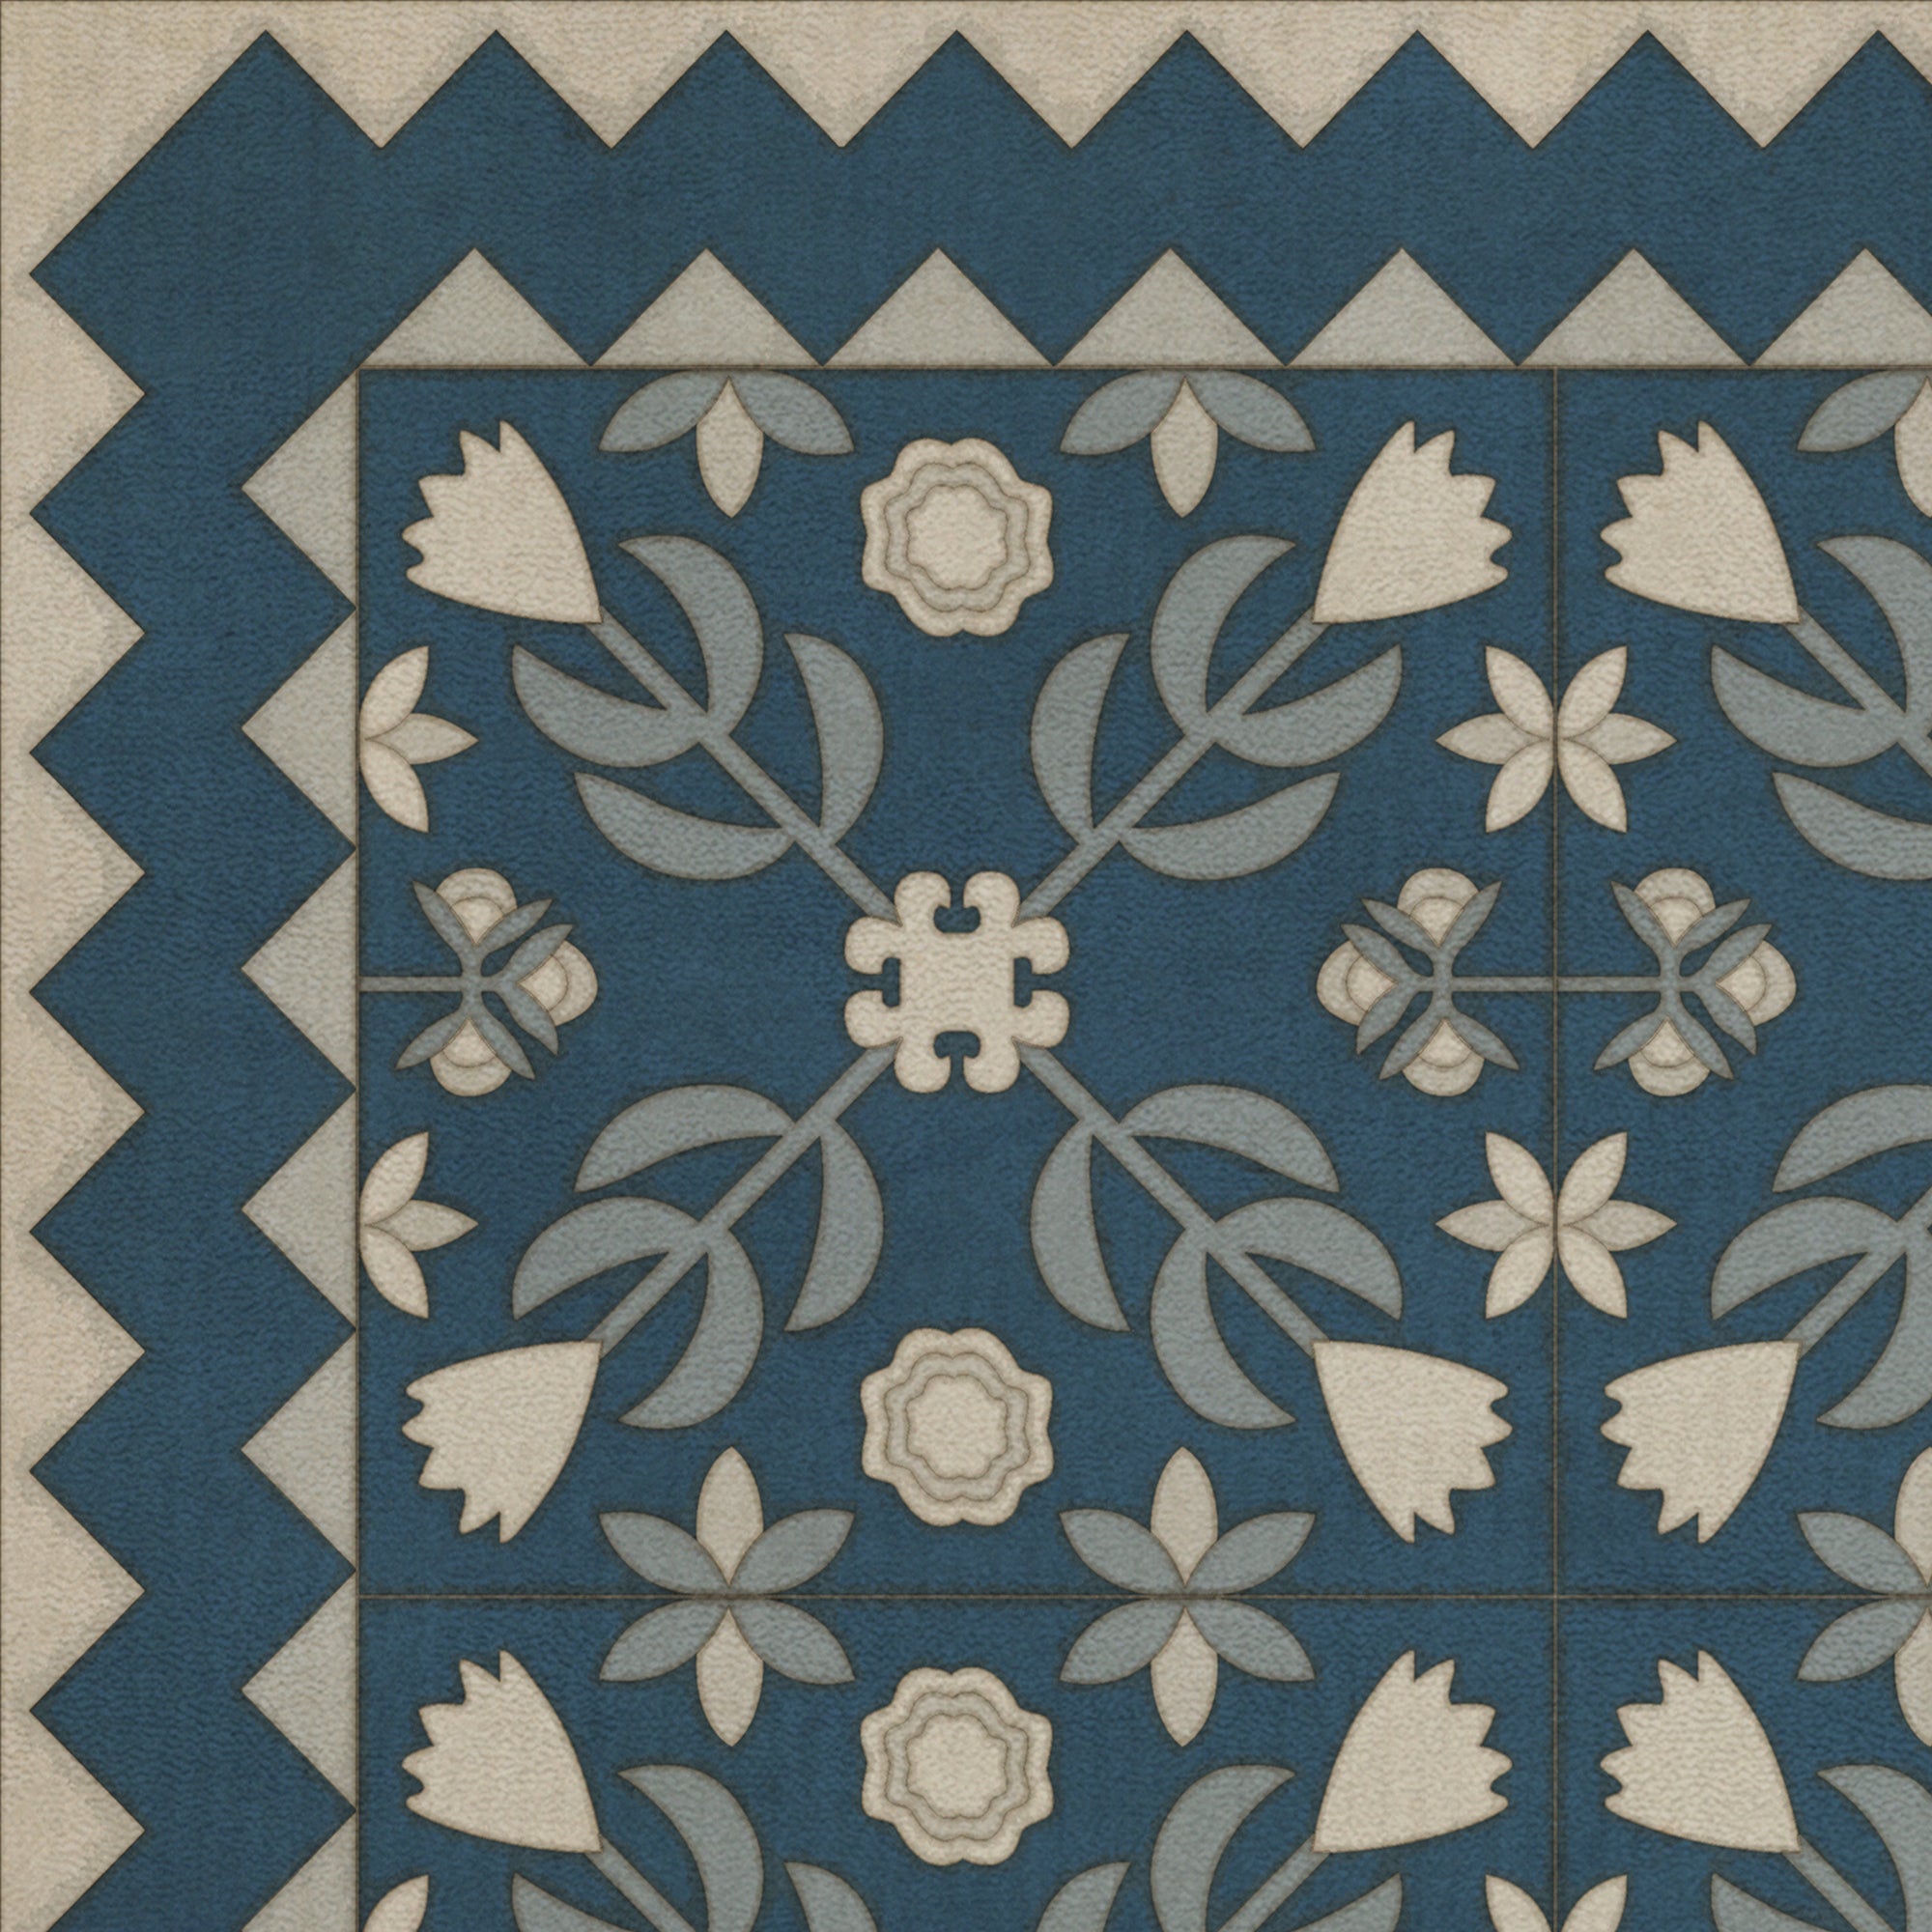 Folk Art Museum Floral Quilt Spring Rain Vinyl Floor Cloth